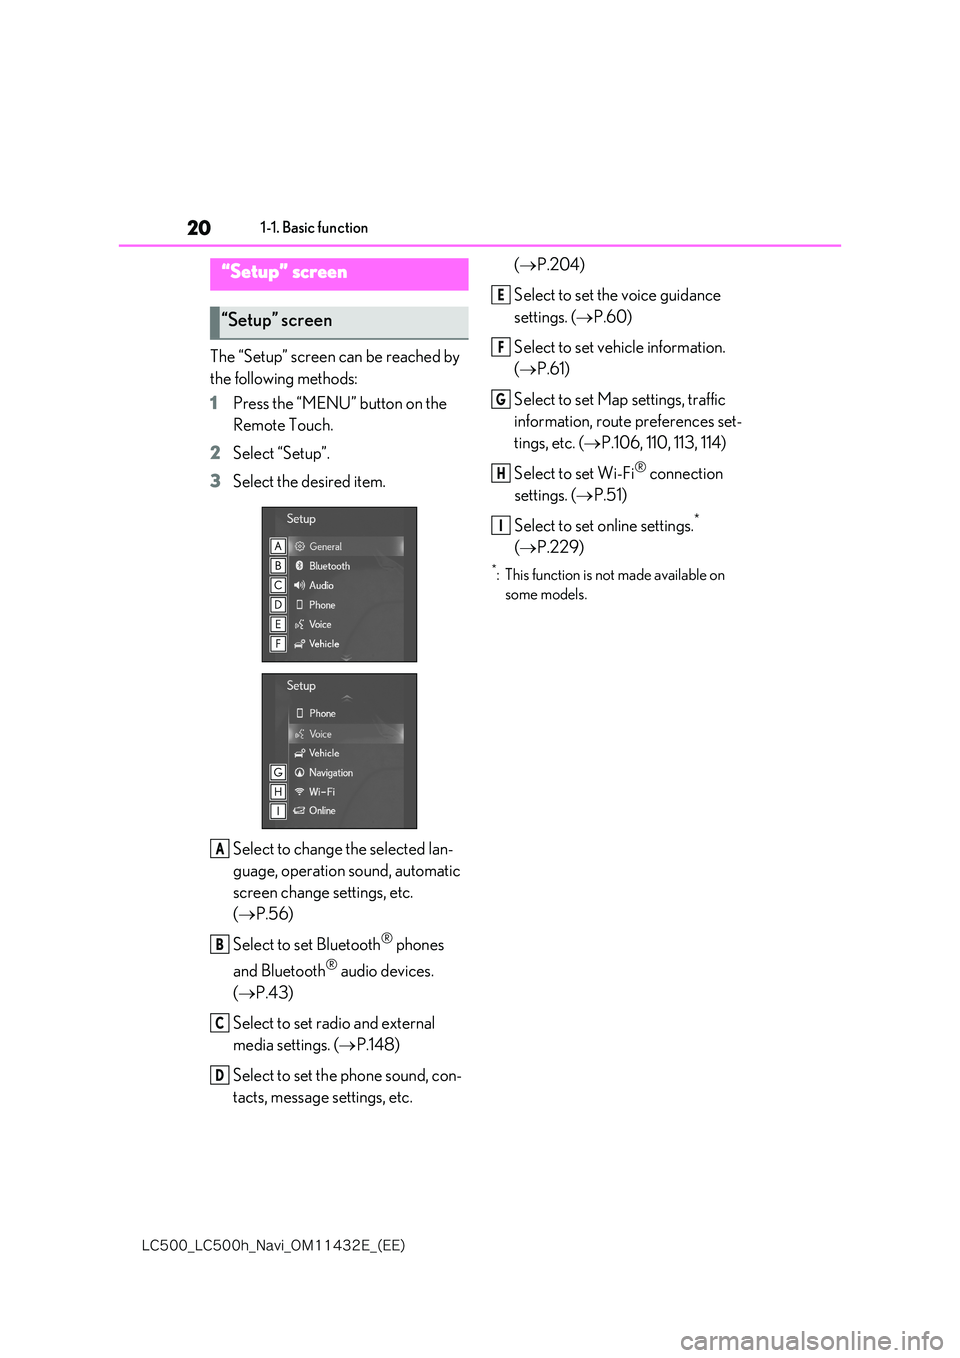 lexus LC500 2018  Navigation Manual 20
�-�$����@�-�$����I�@�/�B�W�J�@�0�.������&�@�	�&�&�

1-1. Basic function
The “Setup” screen can be reached by  
the following methods: 
1 Press the “MENU” button on the  
Remote T